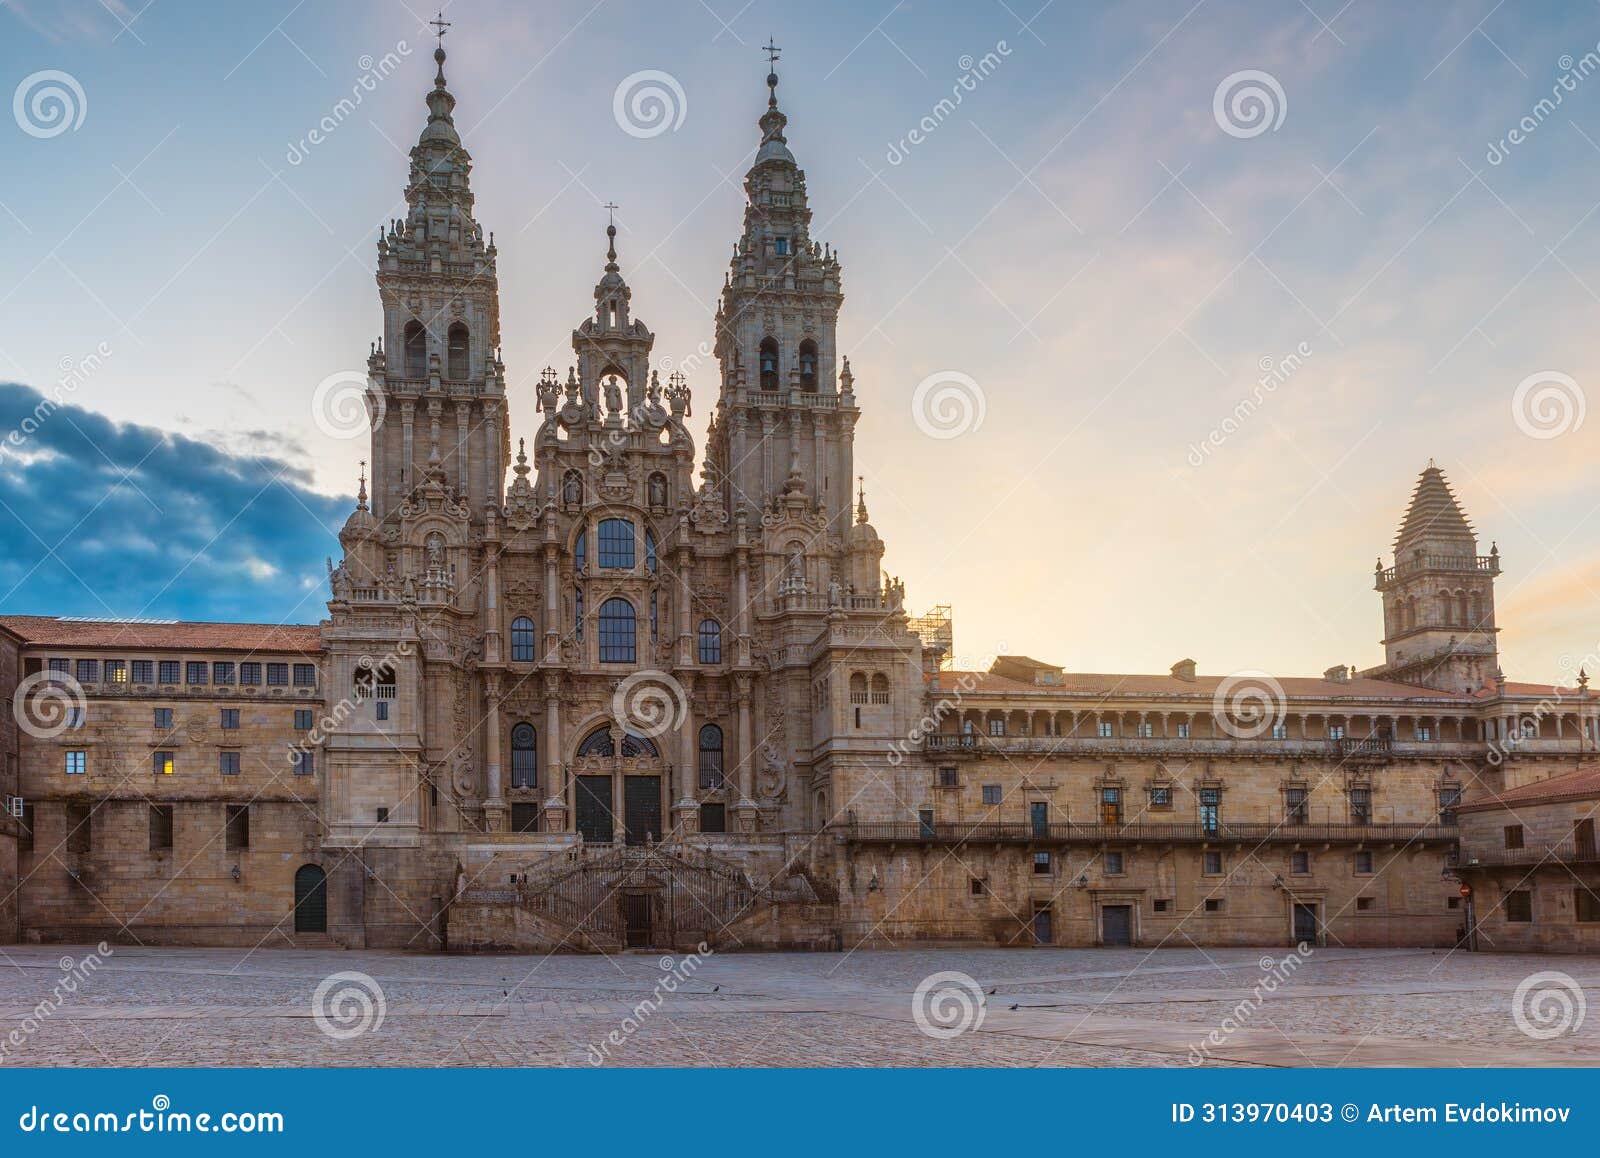 cathedral of santiago de compostela at sunrise from main square praza do obradoiro, galicia, spain. facade of famous